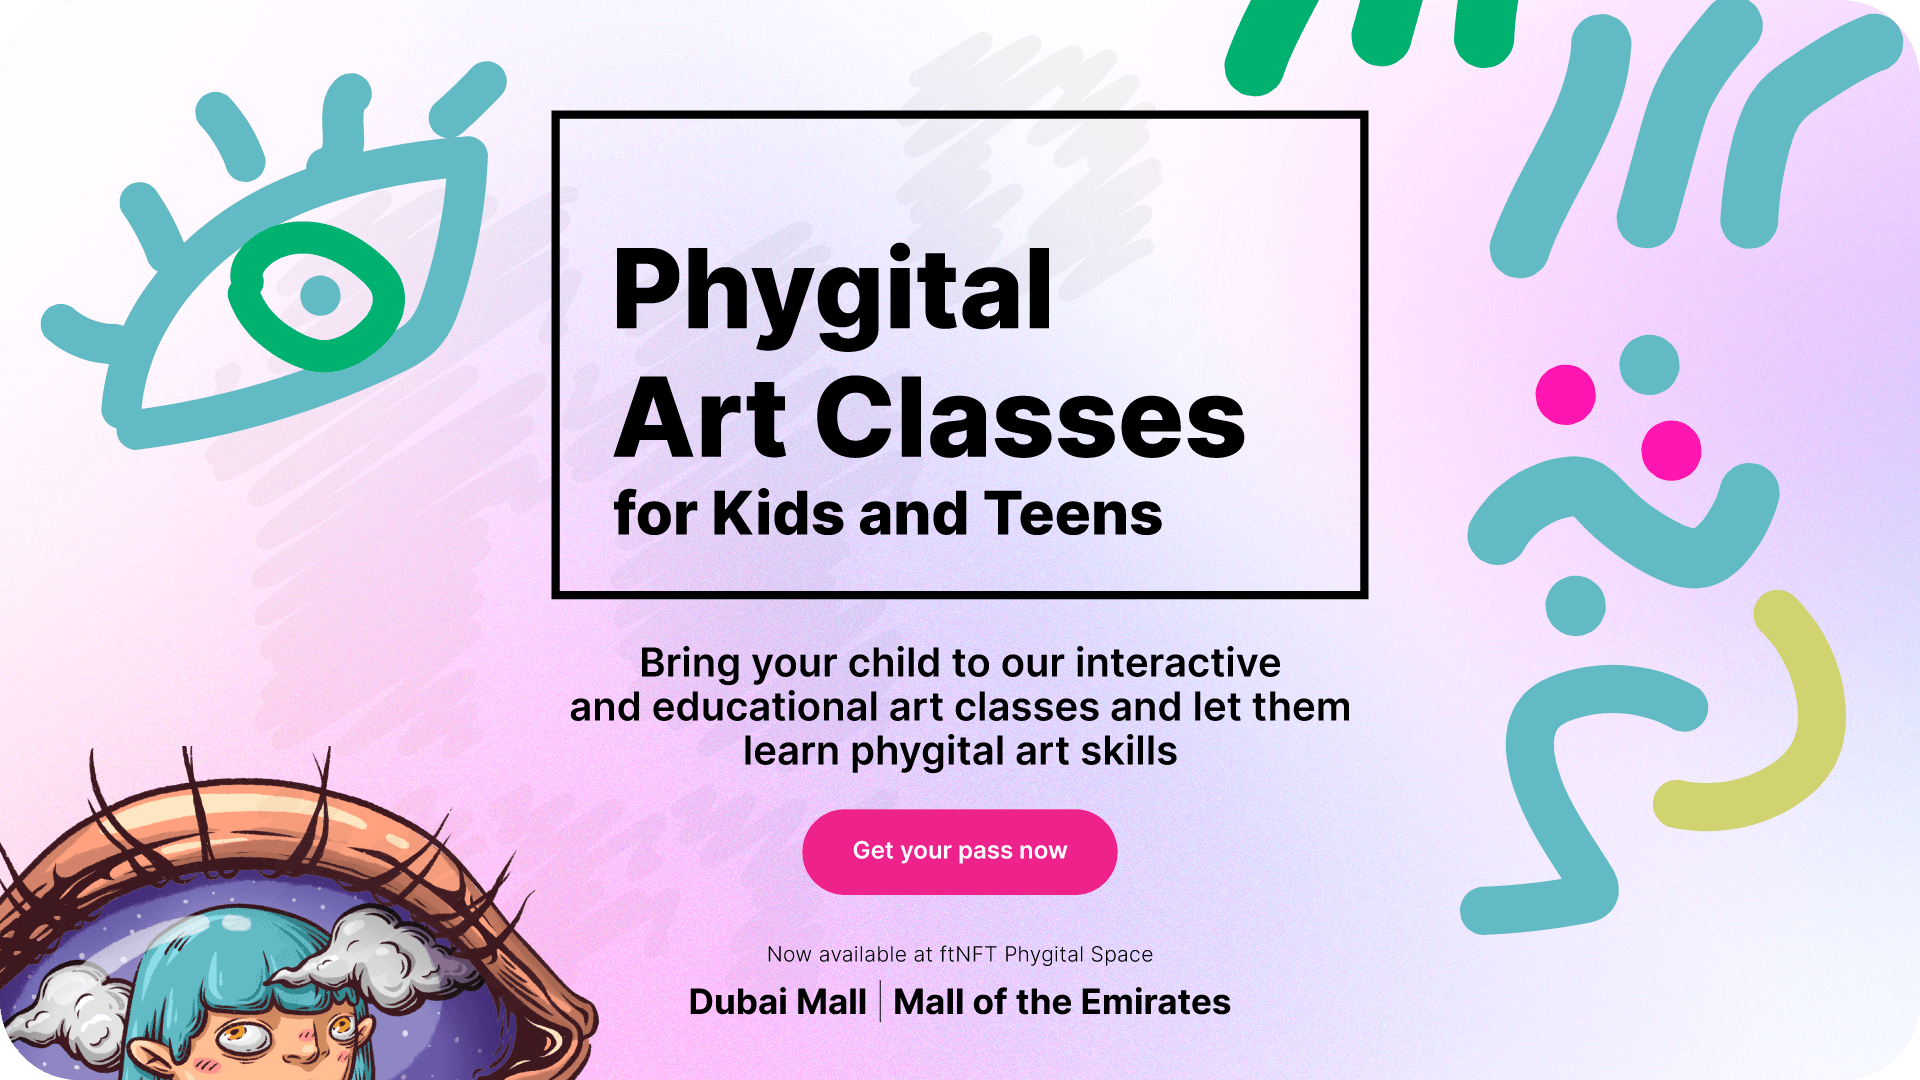 Children’s Art Classes at the ftNFT Phygital Space, Dubai